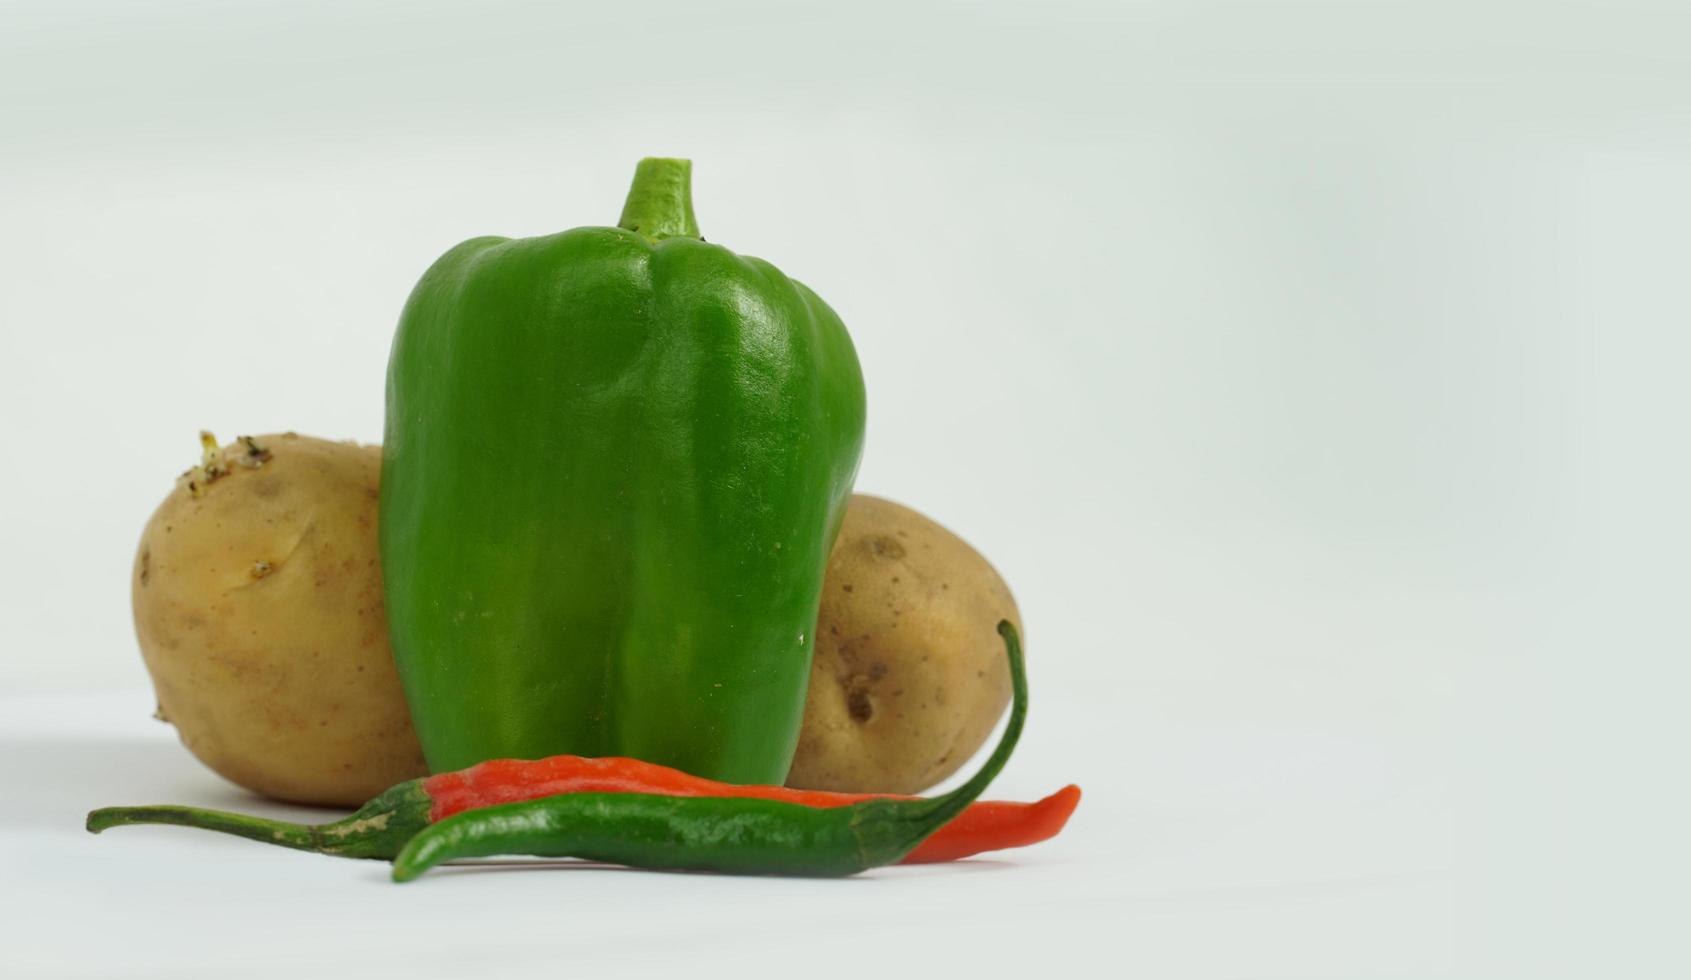 fresh vegetables capsicum chillie and potato on white background photo